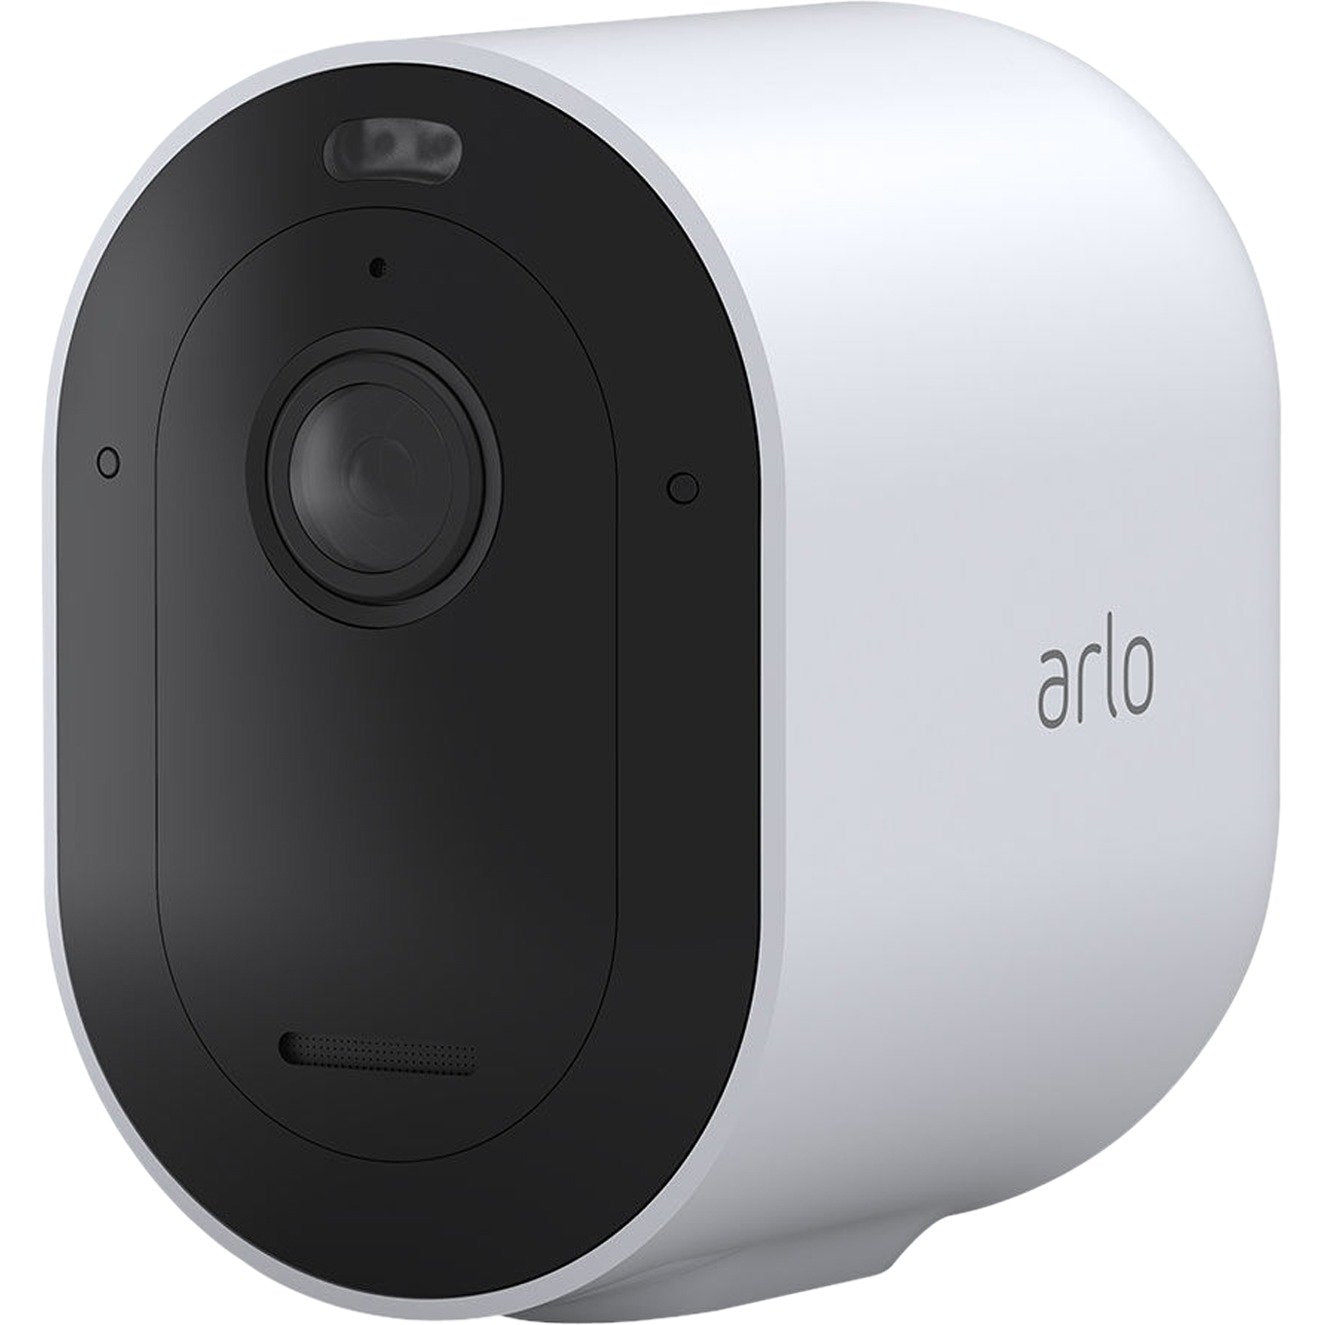 Arlo VMC4450P-100NAR Pro 4 Series 2K HDR Spotlight Security Camera 4 Pack - Certified Refurbished